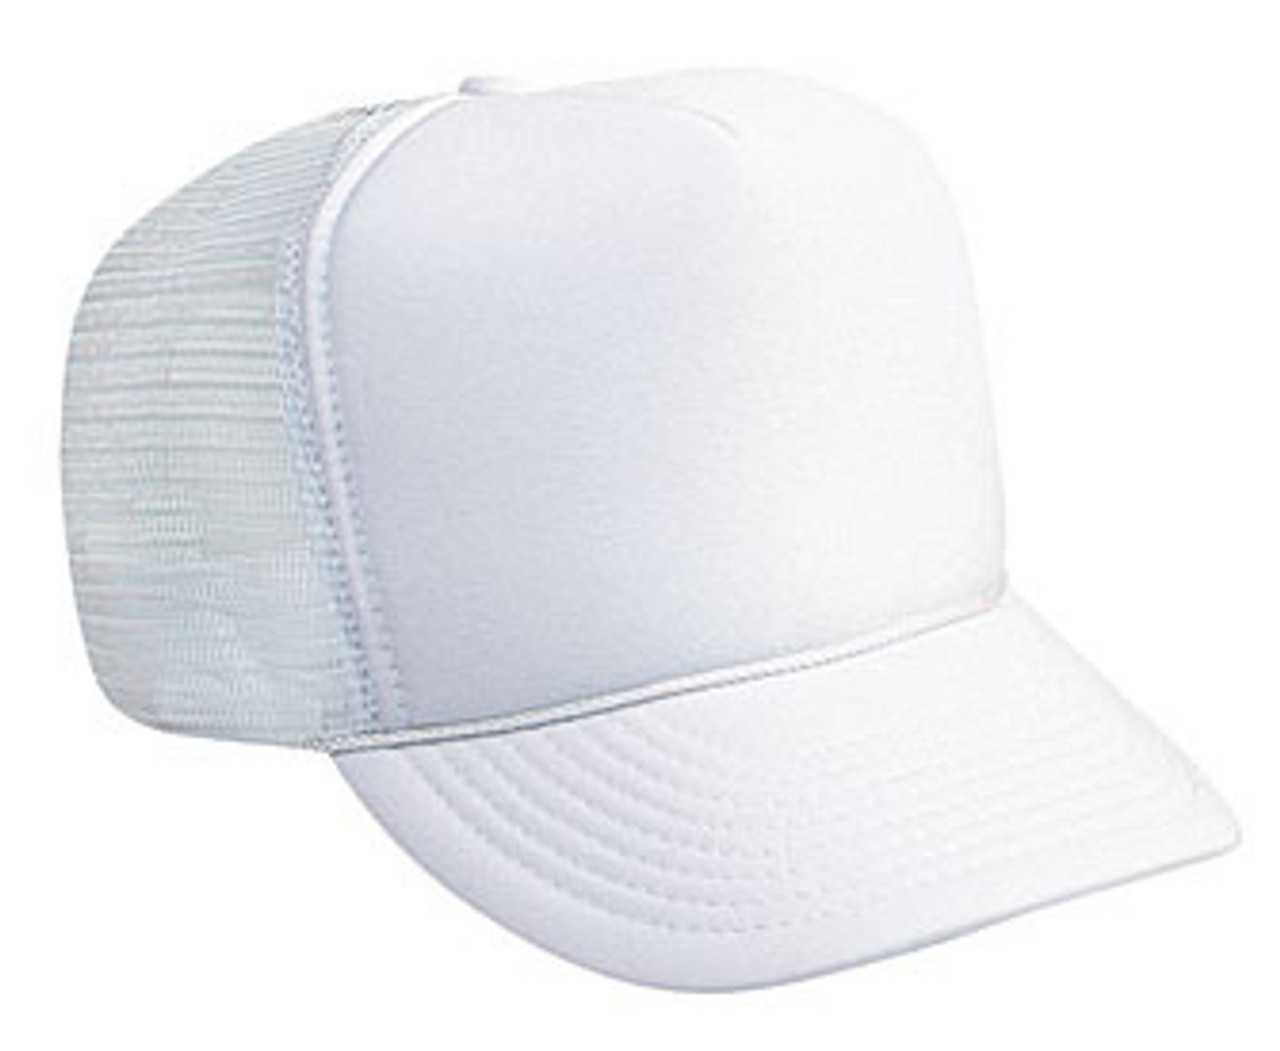 SOLID WHITE MESH Hat, Trucker Hat, Mesh Hat, Blank Plain Hat